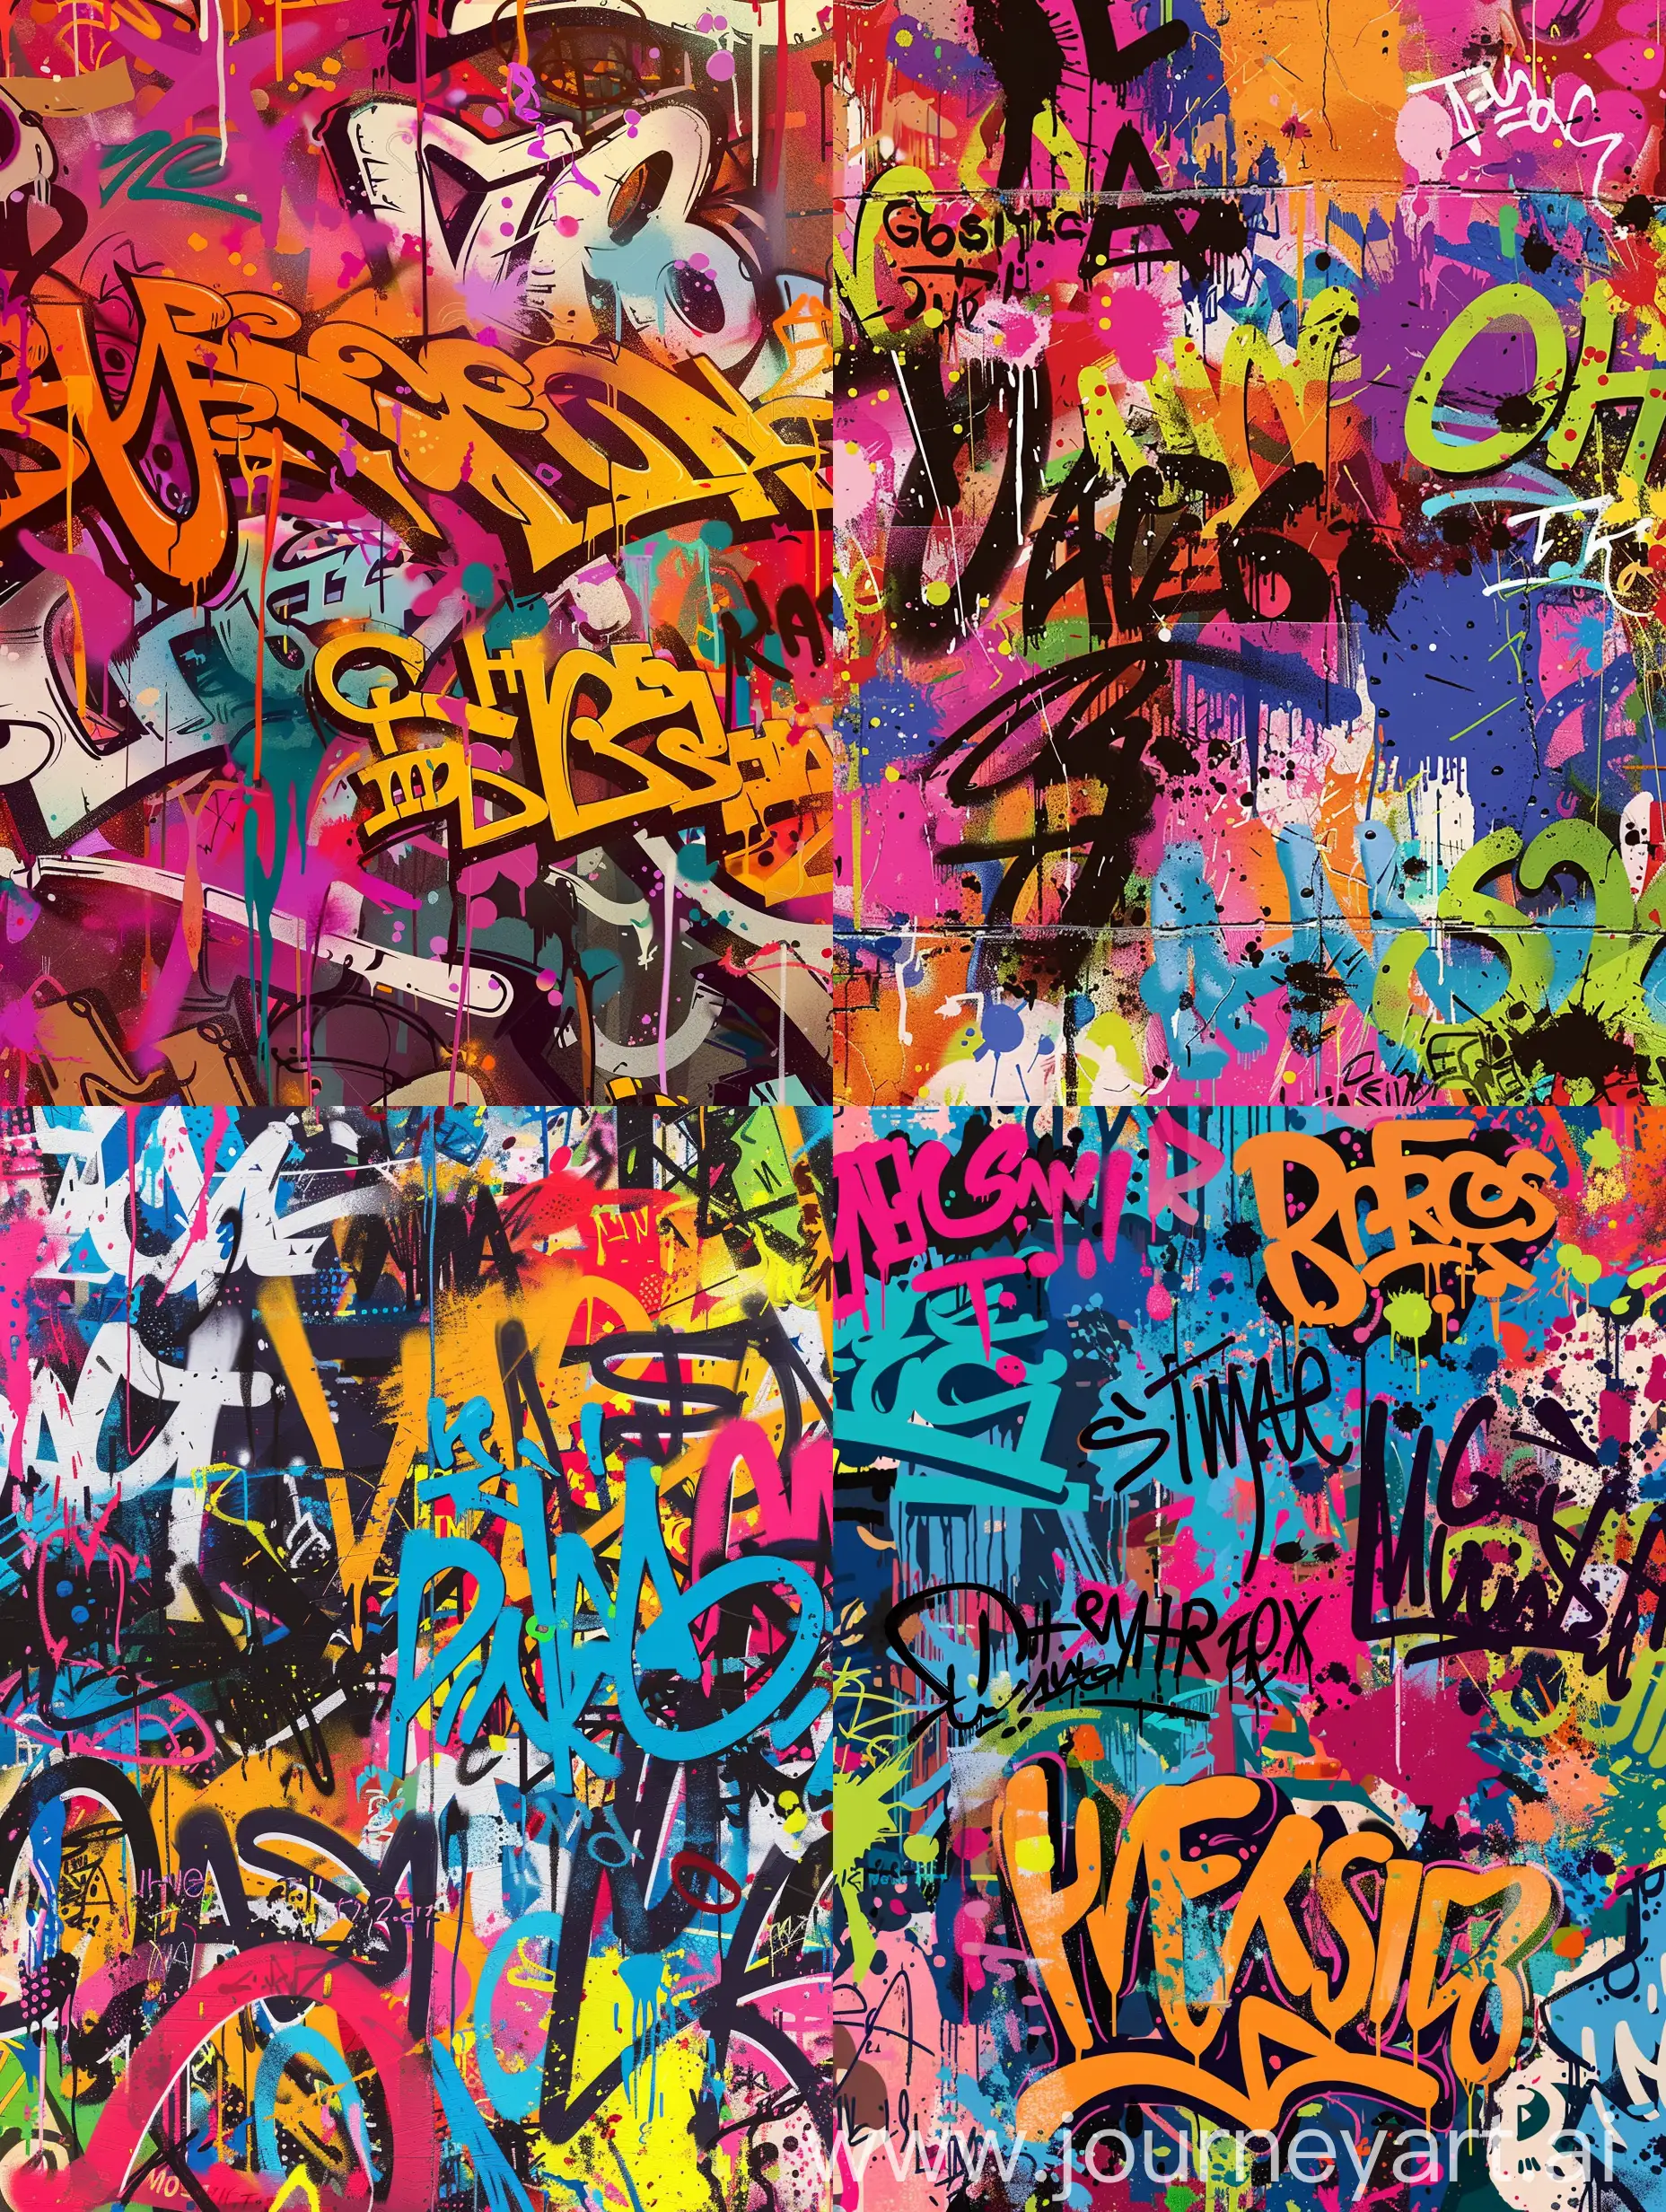 Vibrant-Graffiti-Fantasy-Urban-Illustration-with-Roll-Royce-Emblem